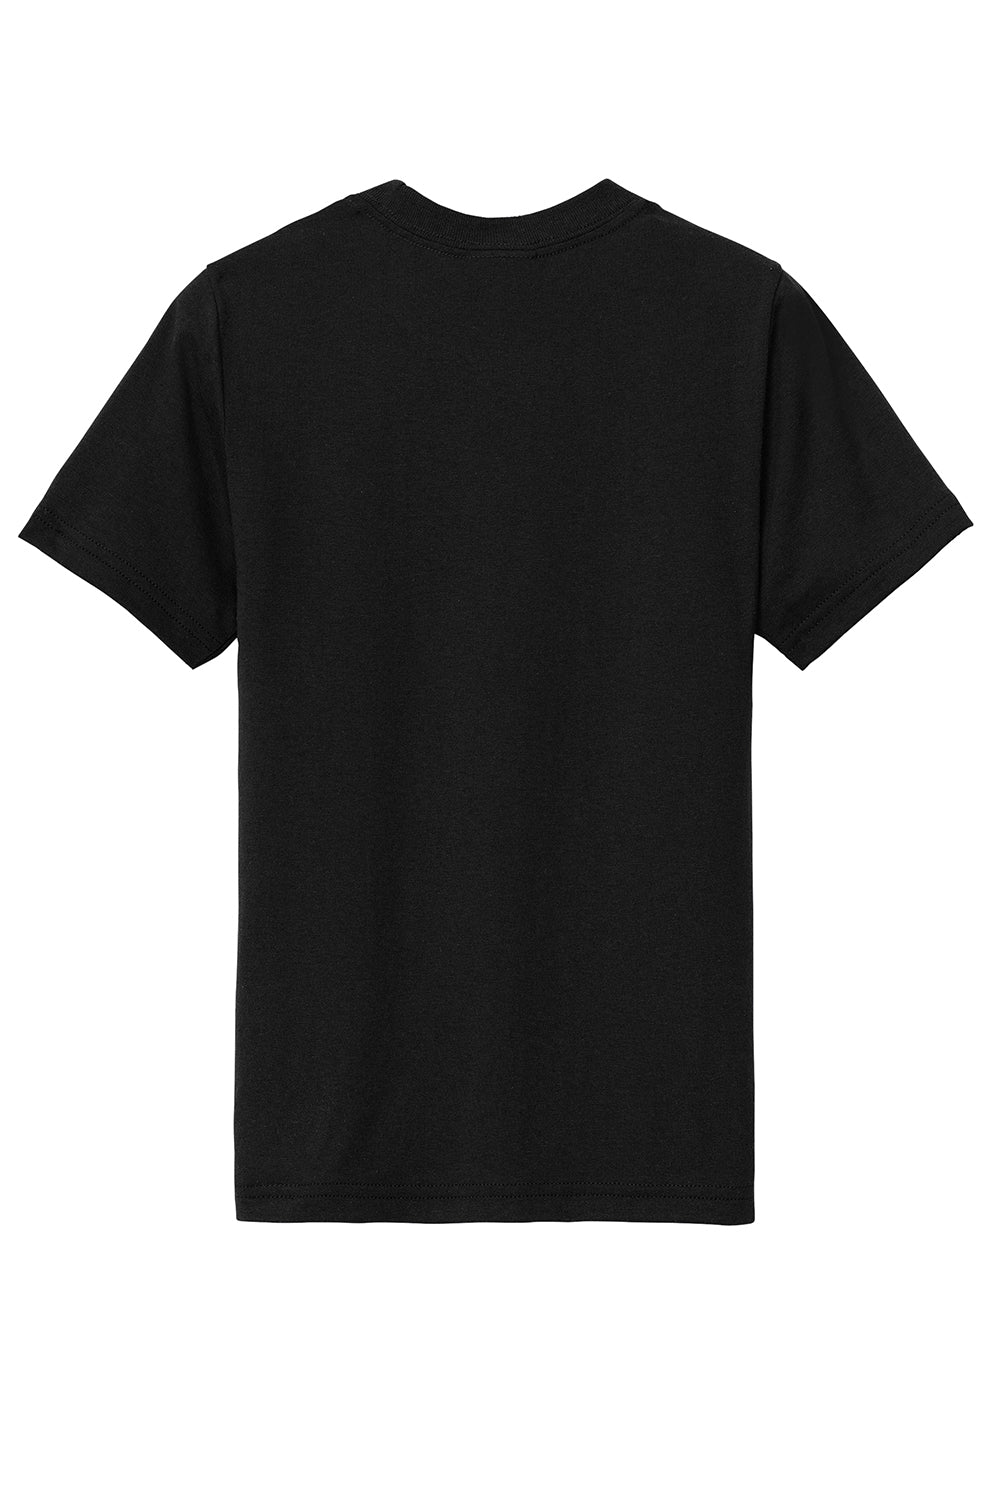 Port & Company PC330Y Youth Short Sleeve Crewneck T-Shirt Black Flat Back